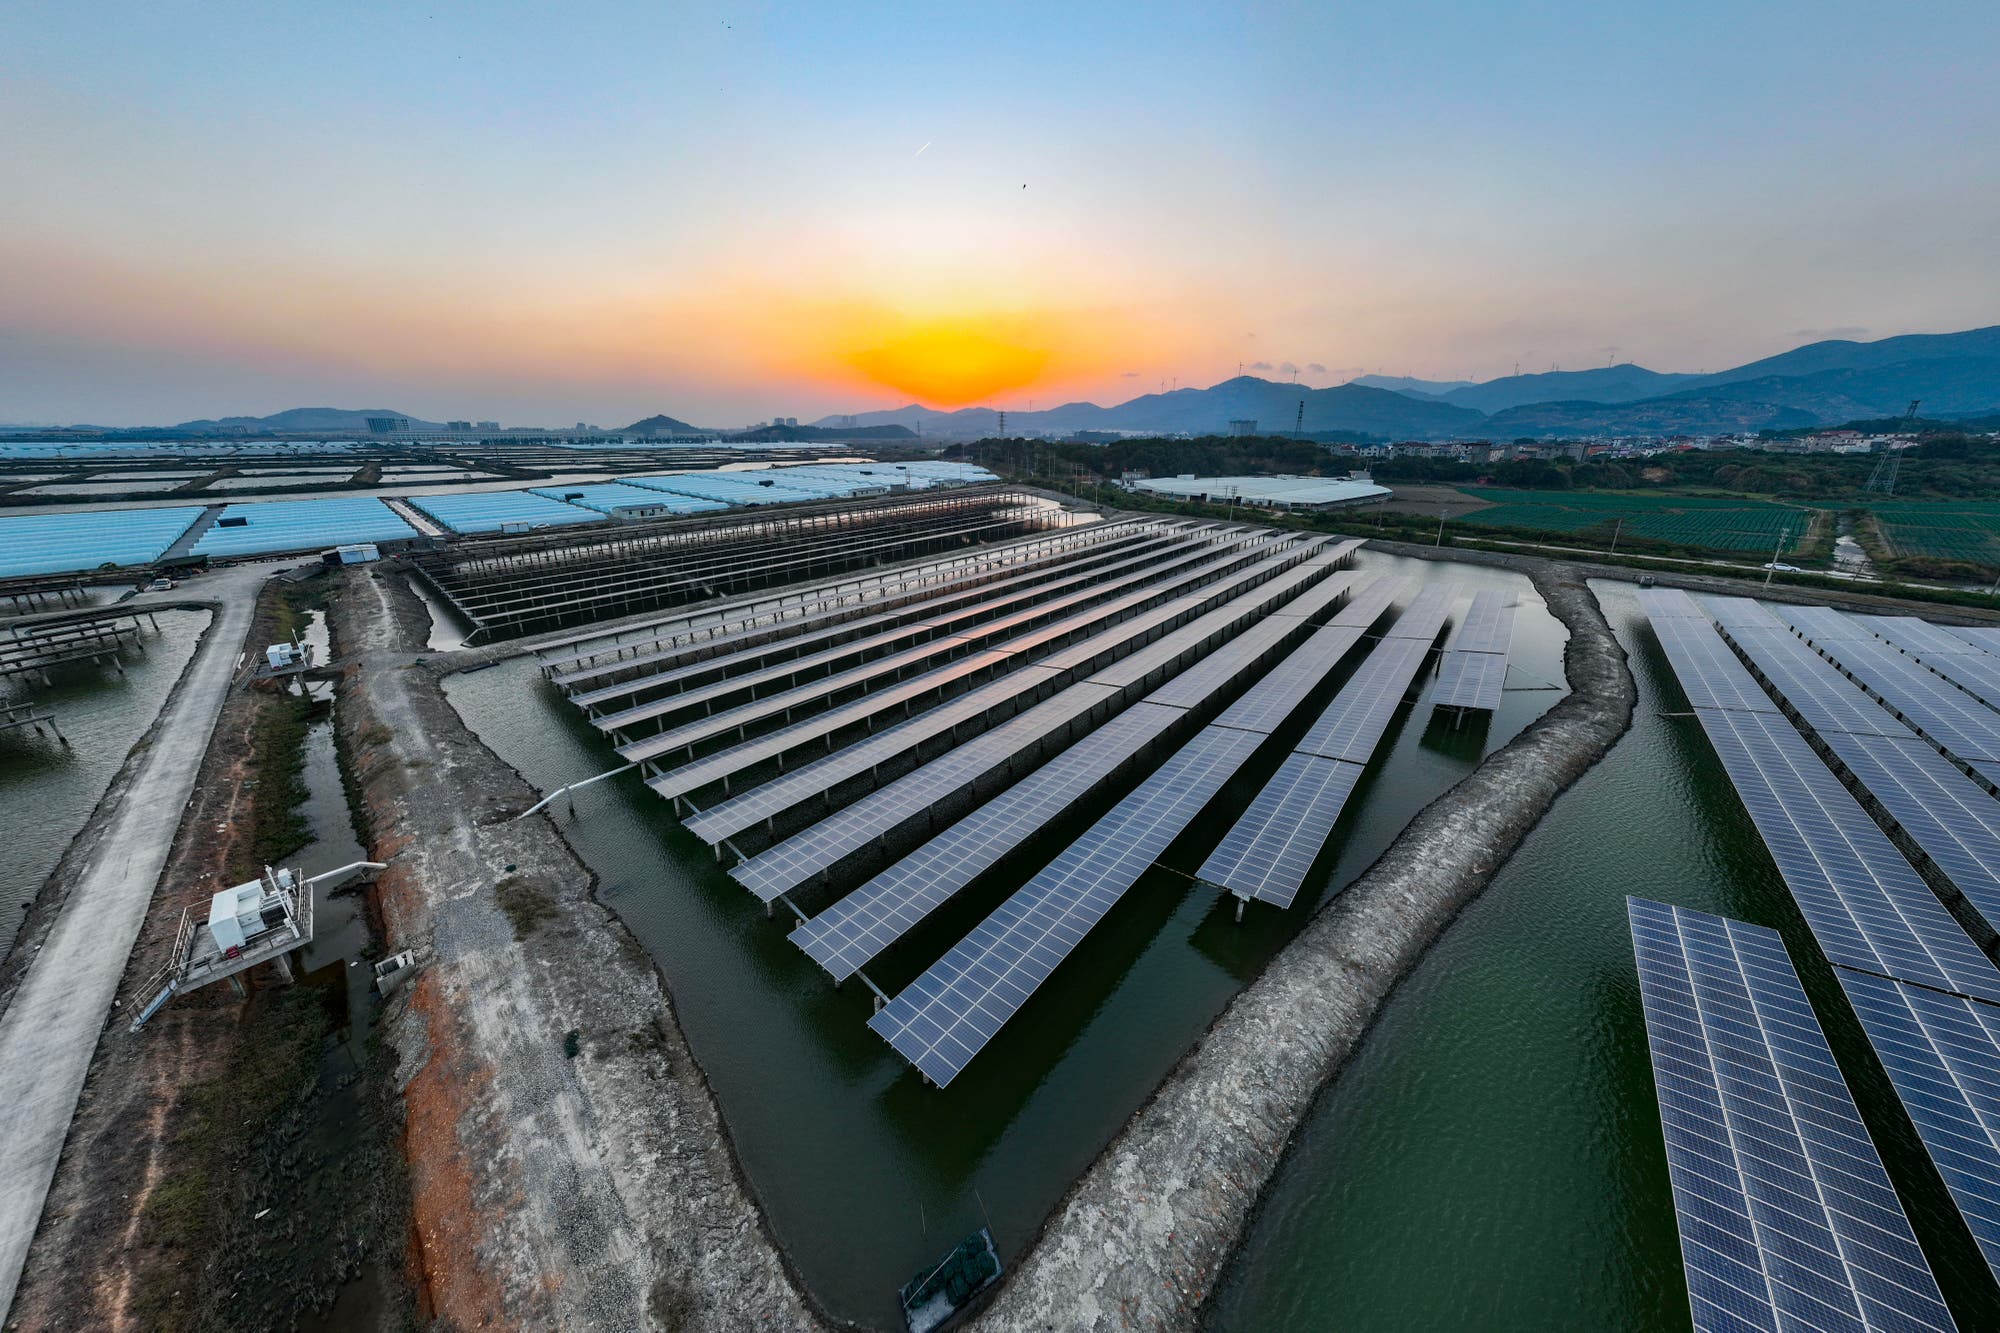 Fisch-Solarfarm-Kombination in China